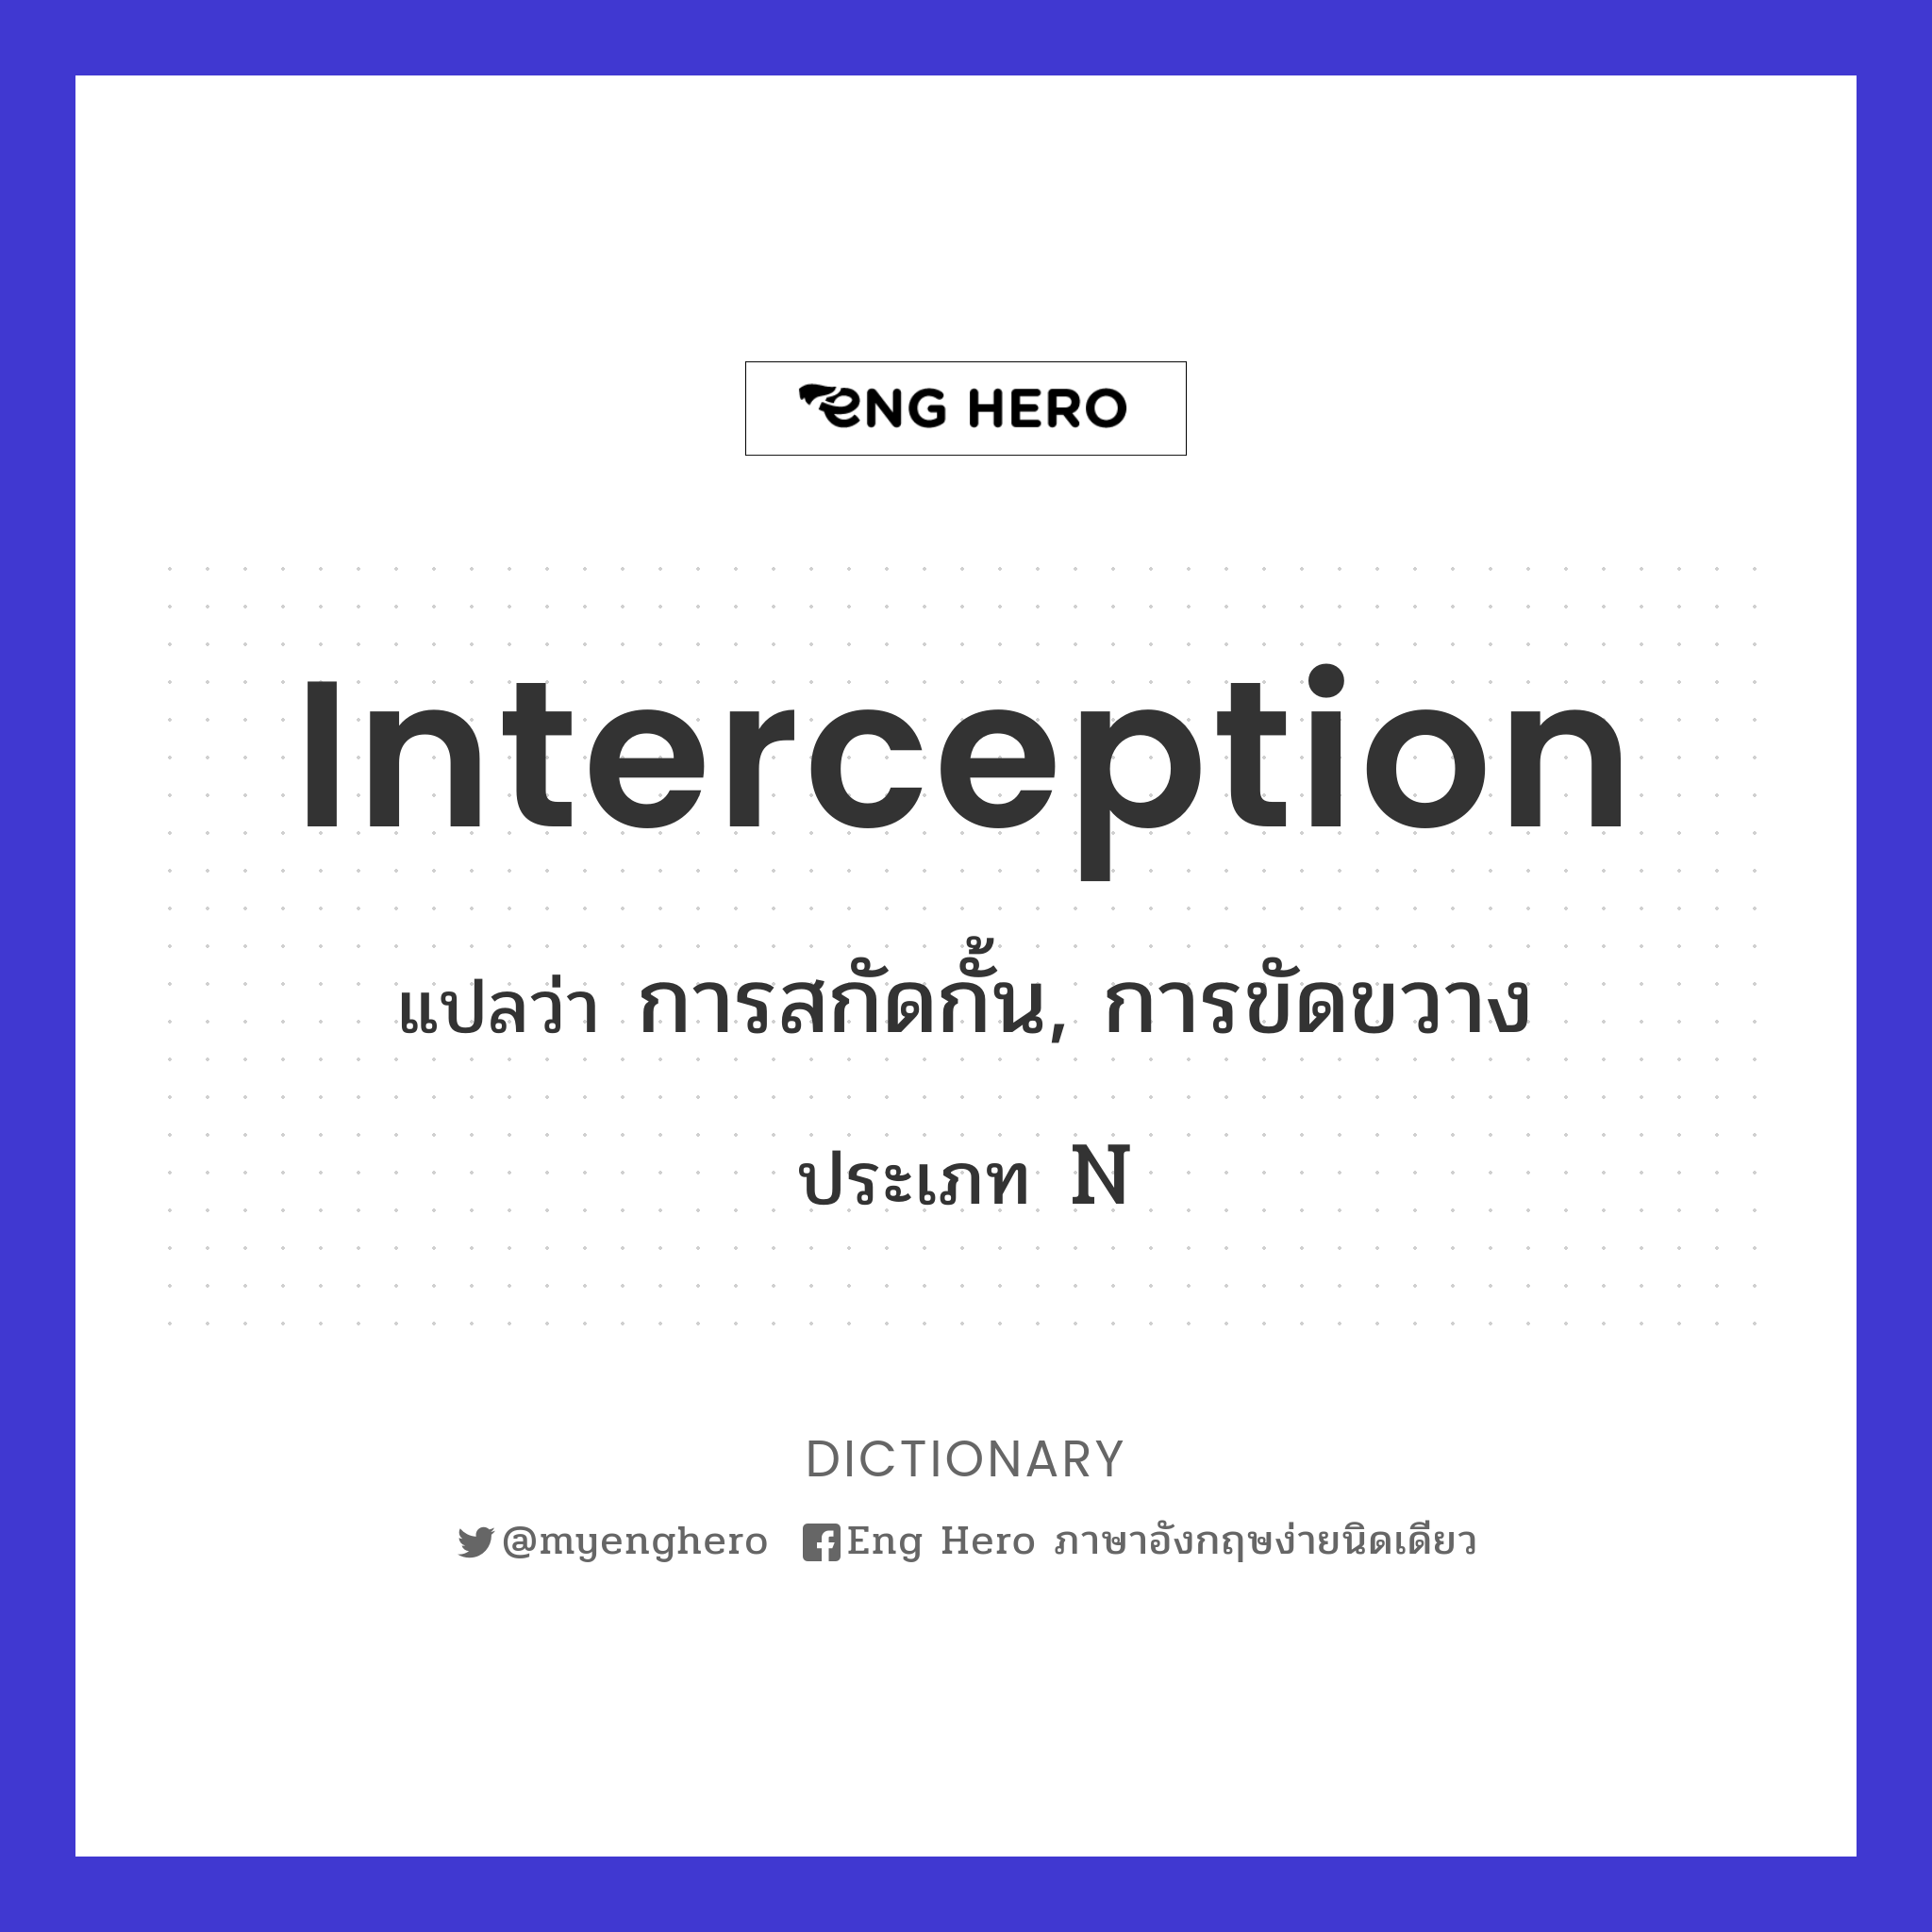 interception